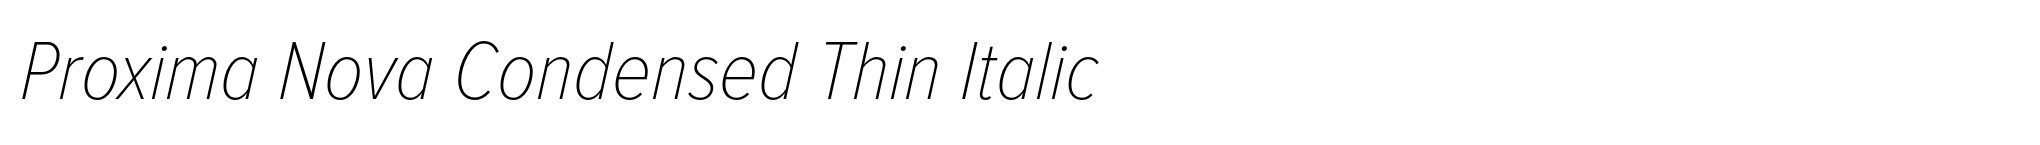 Proxima Nova Condensed Thin Italic image